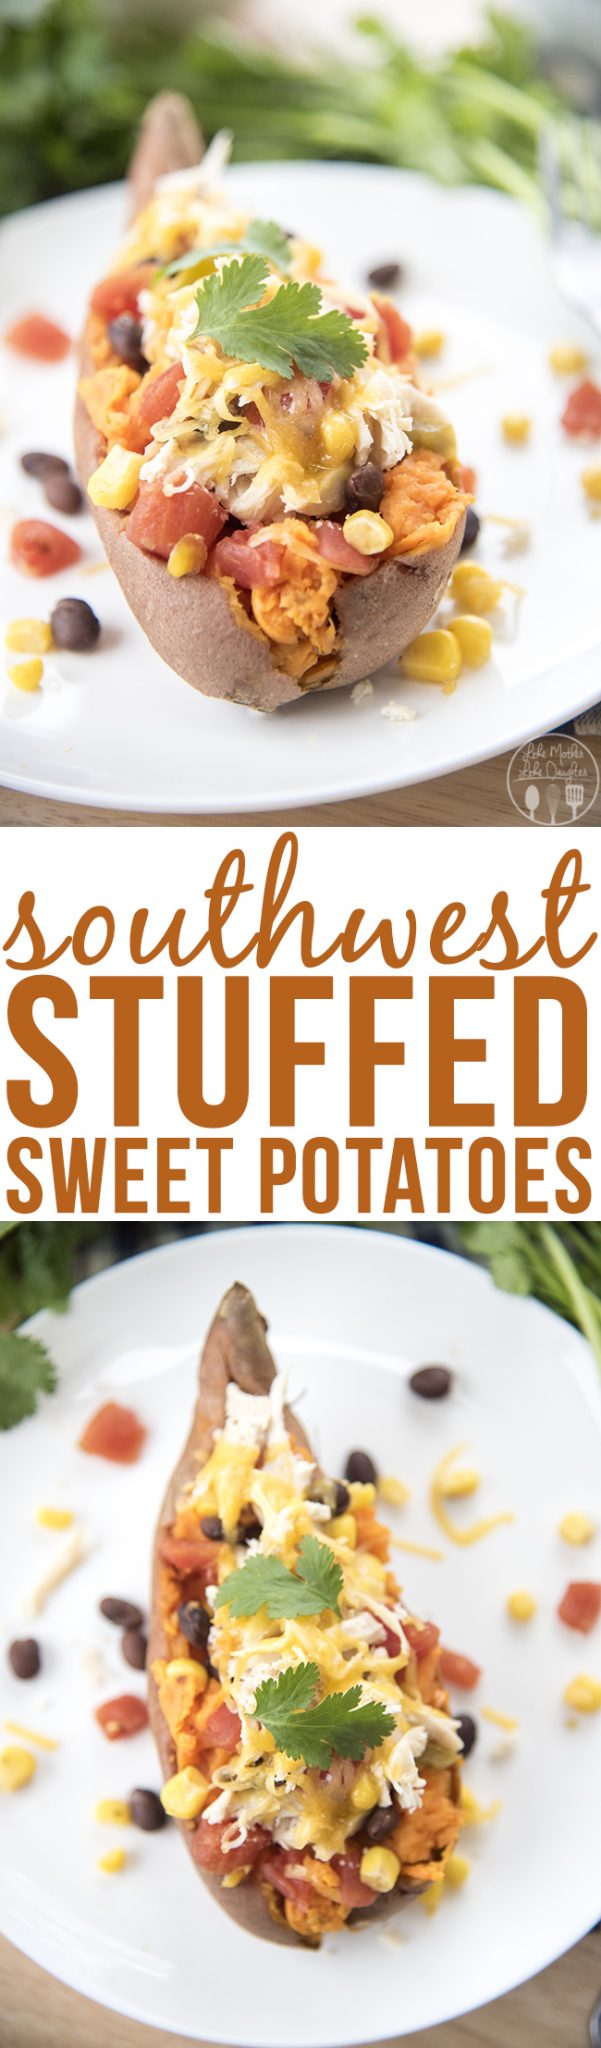 Southwest Stuffed Sweet Potatoes - Like Mother Like Daughter